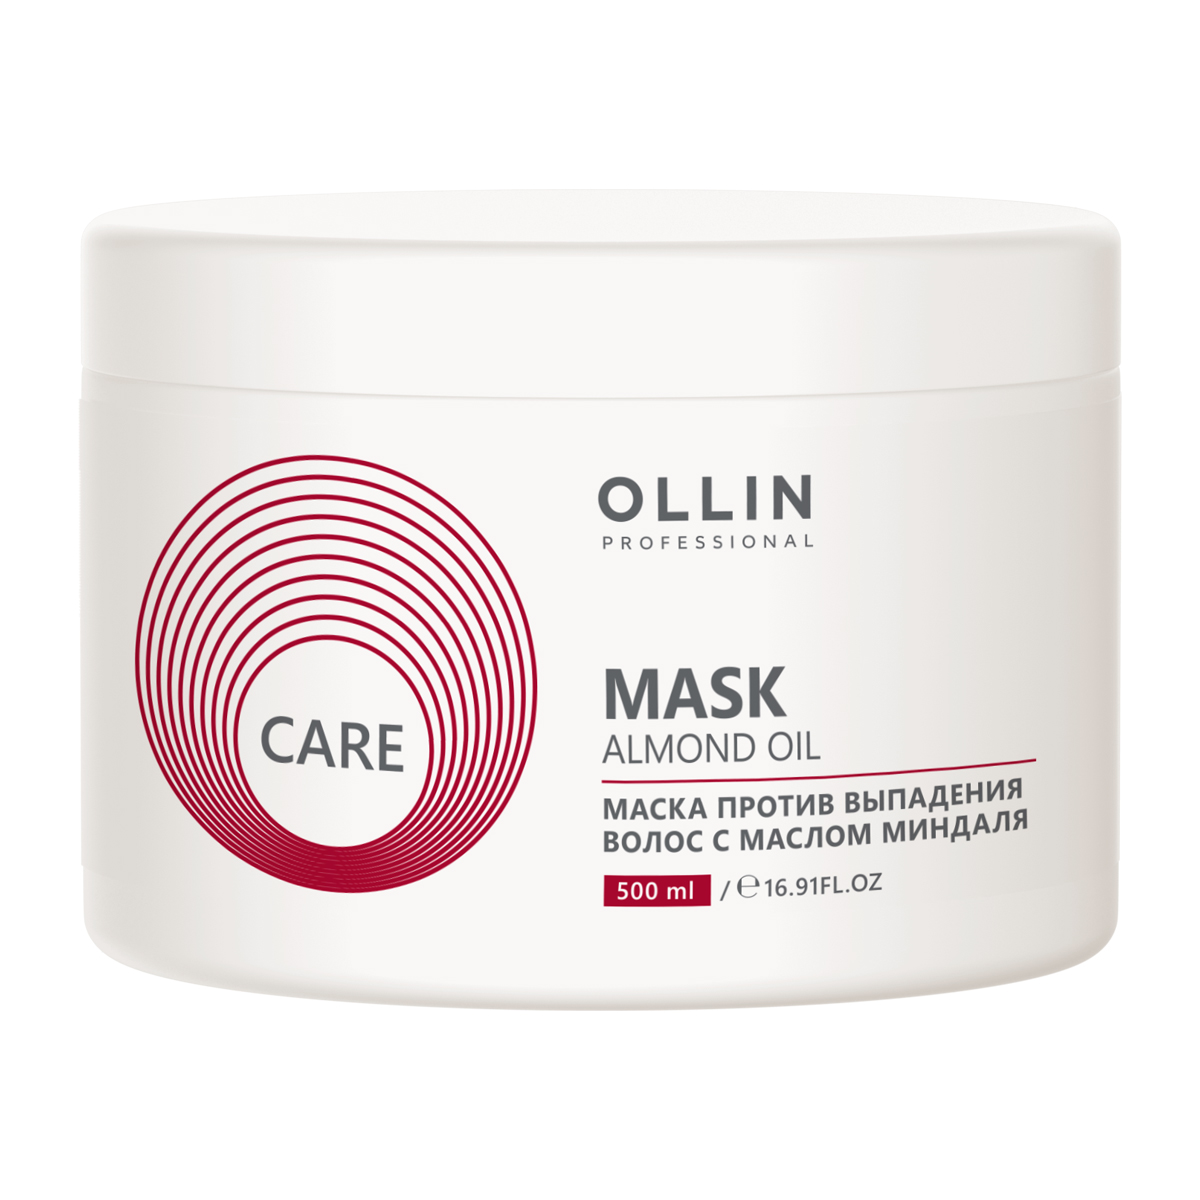 Ollin Professional Маска против выпадения волос с маслом миндаля, 500 мл (Ollin Professional, Care)